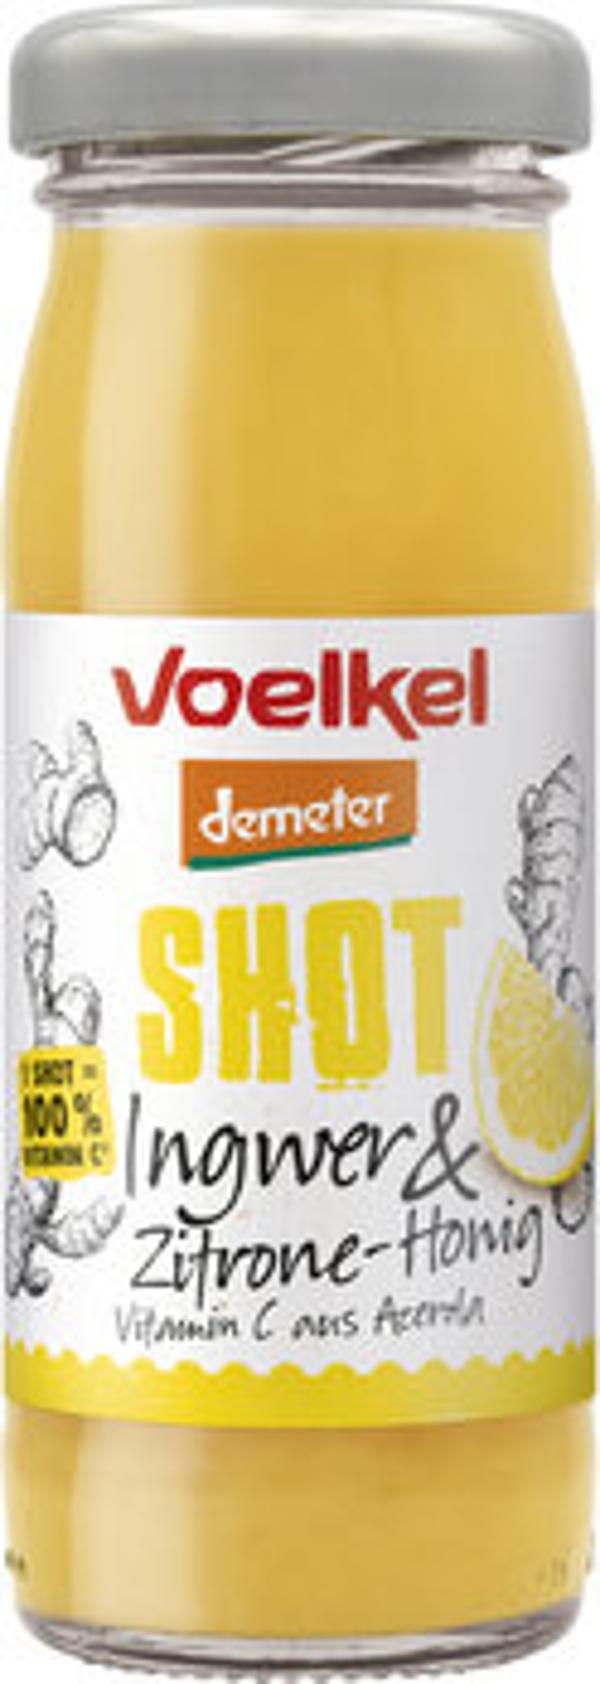 Produktfoto zu Shot Ingwer & Zitrone-Honig